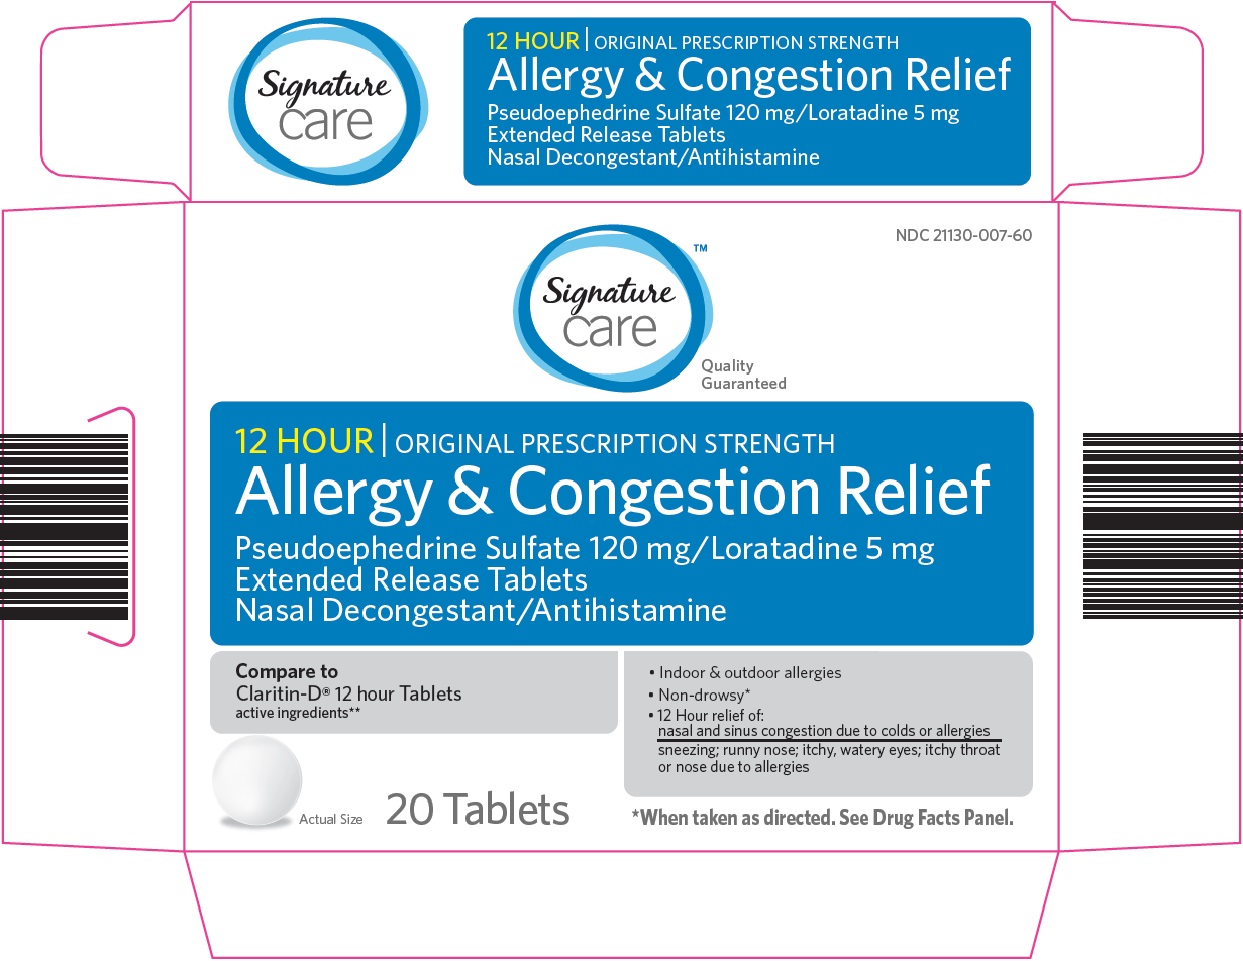 Signature Care Allergy & Congestion Relief image 1